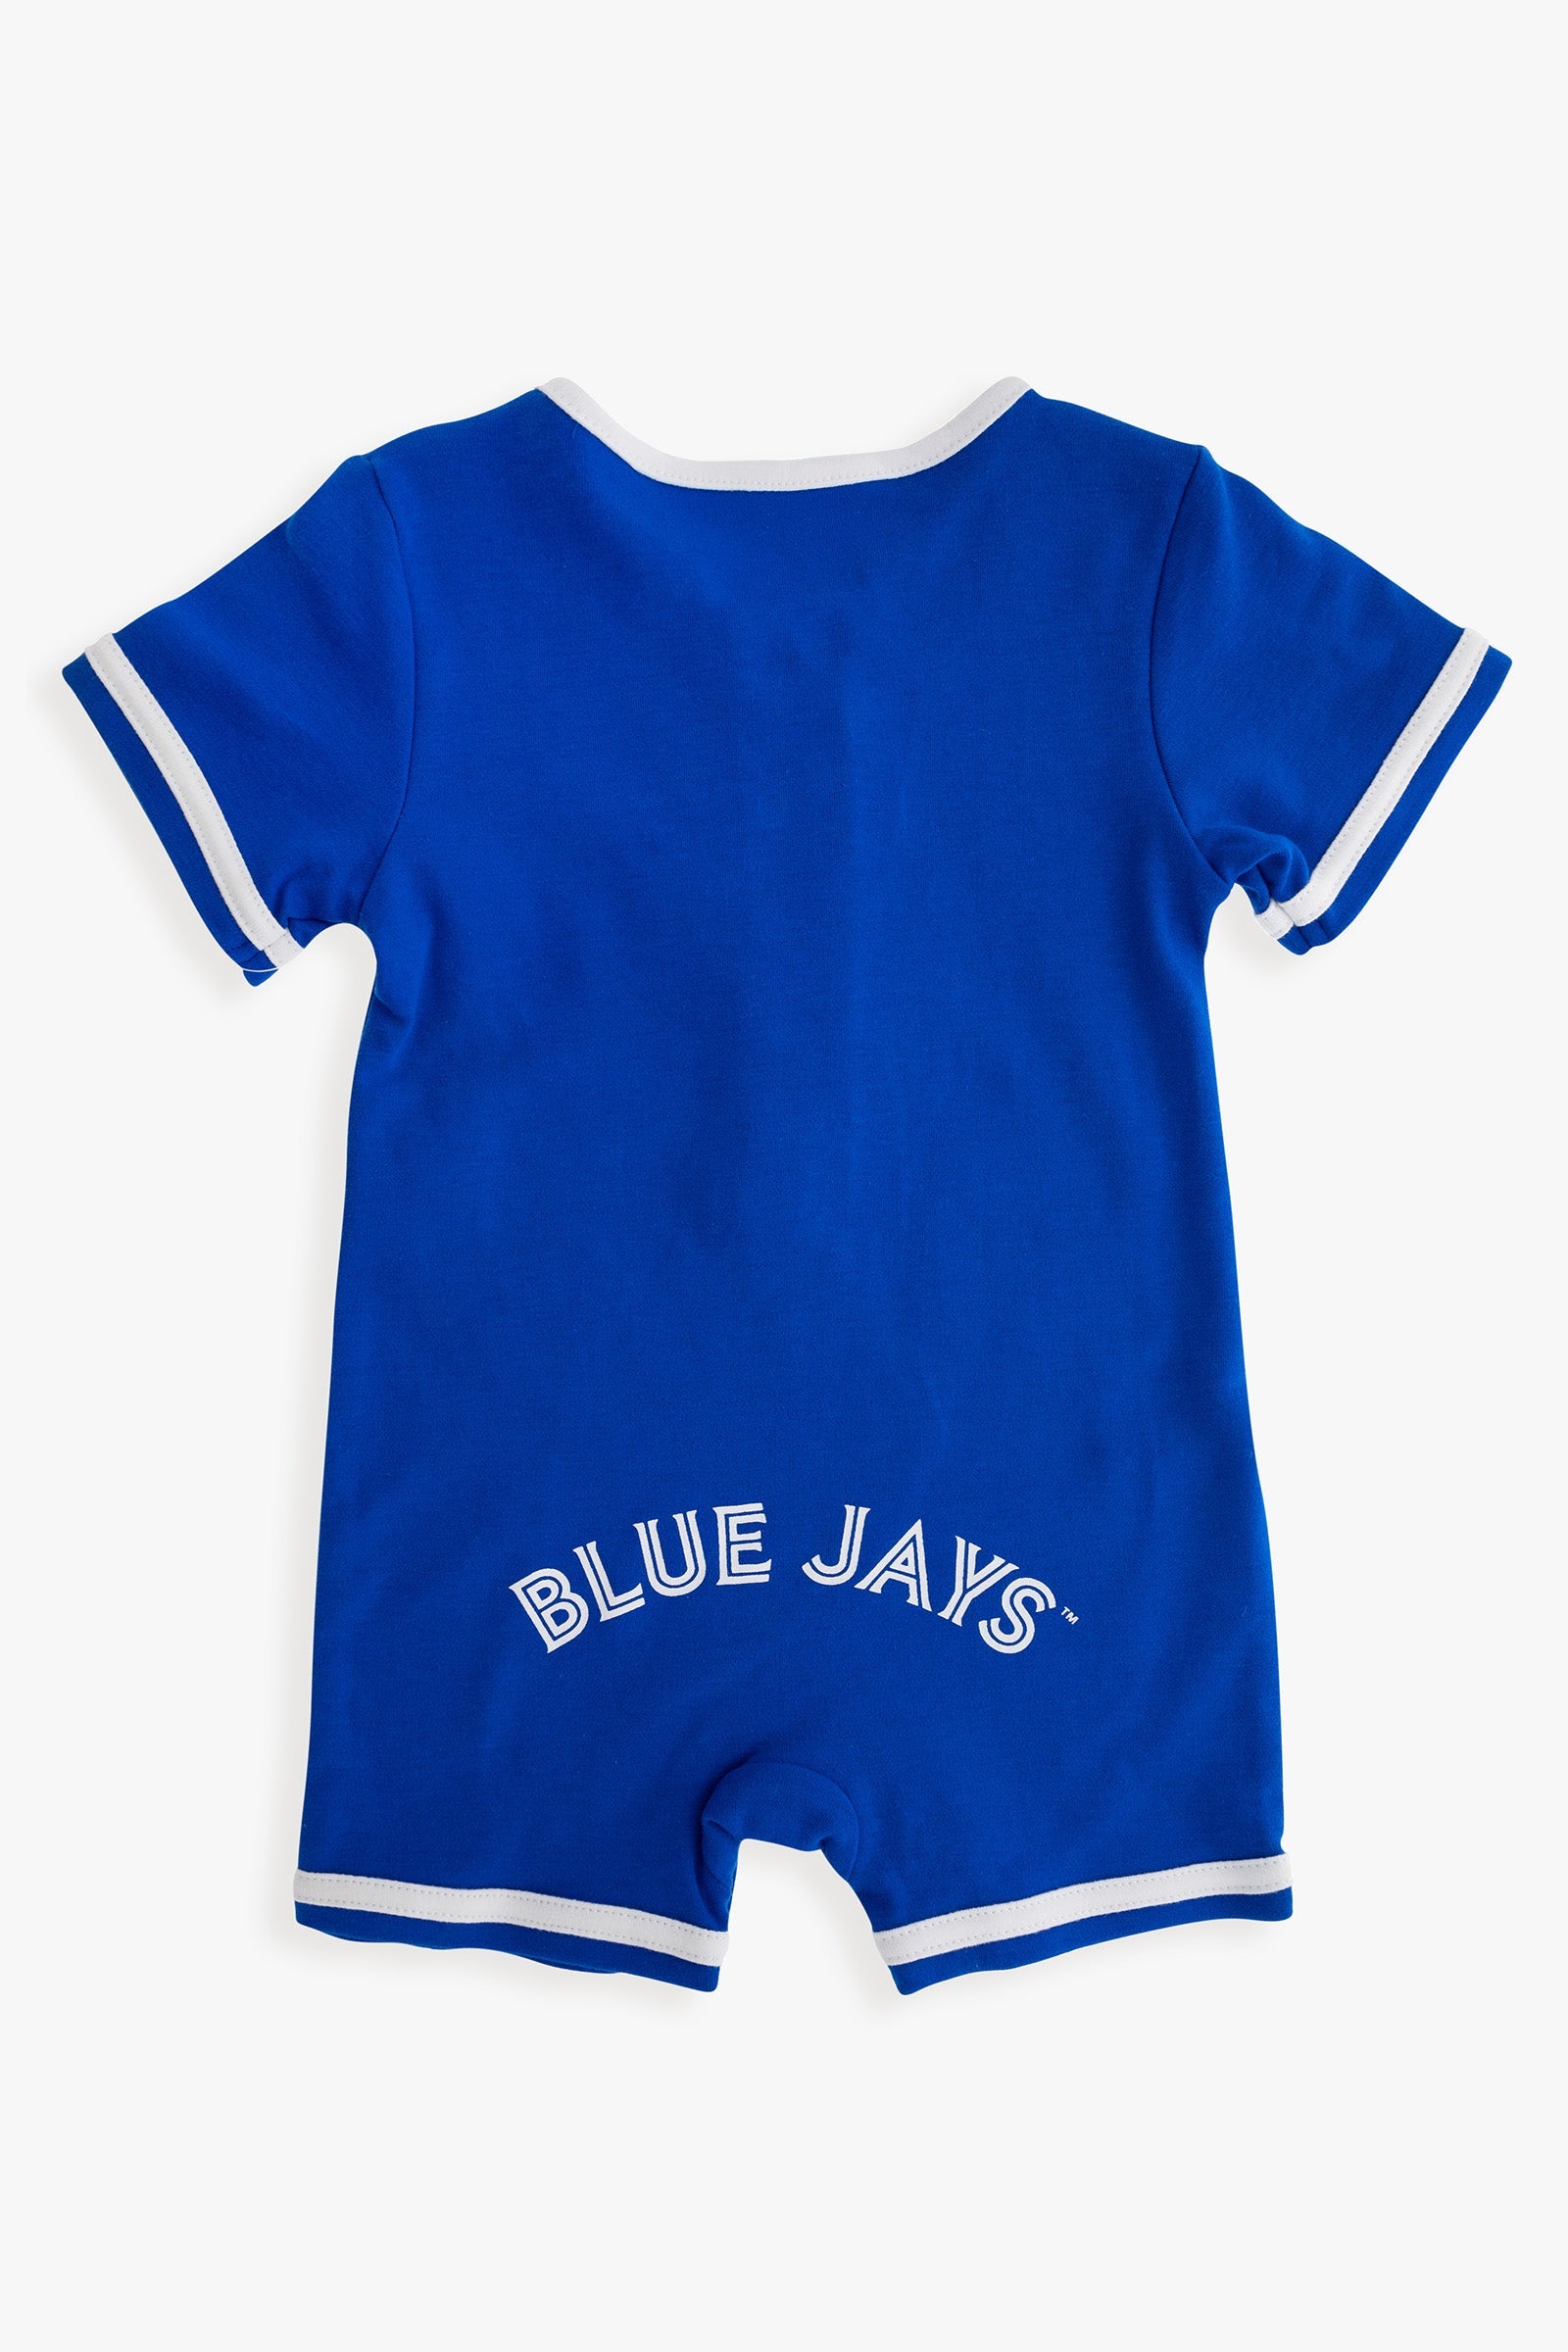 Gertex MLB Toronto Blue Jays Baby Romper